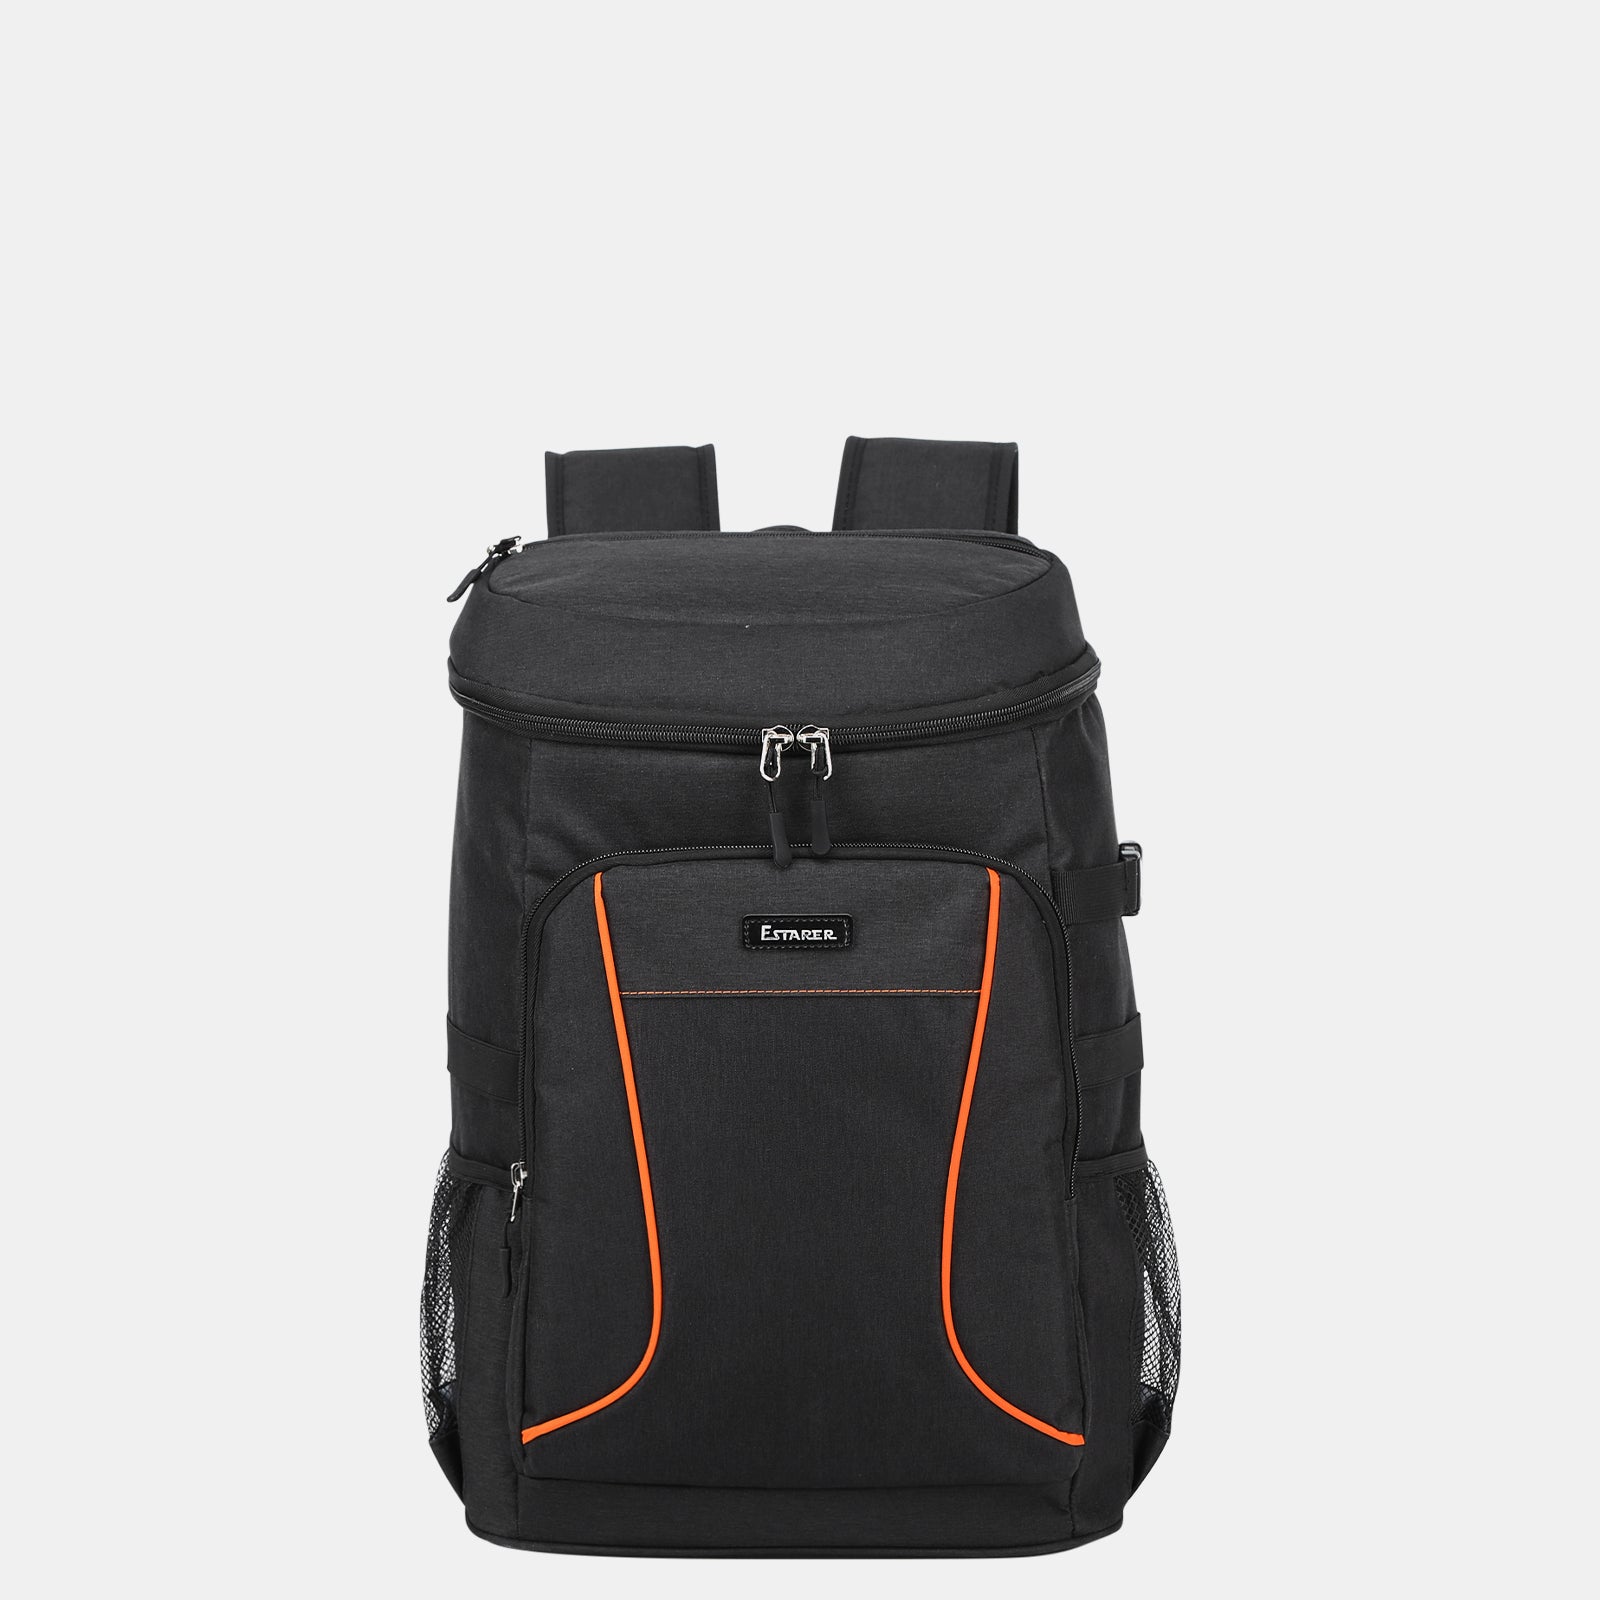 Estarer Insulated Picnic Cooler Traveling Backpack 32L with Bottle Opener